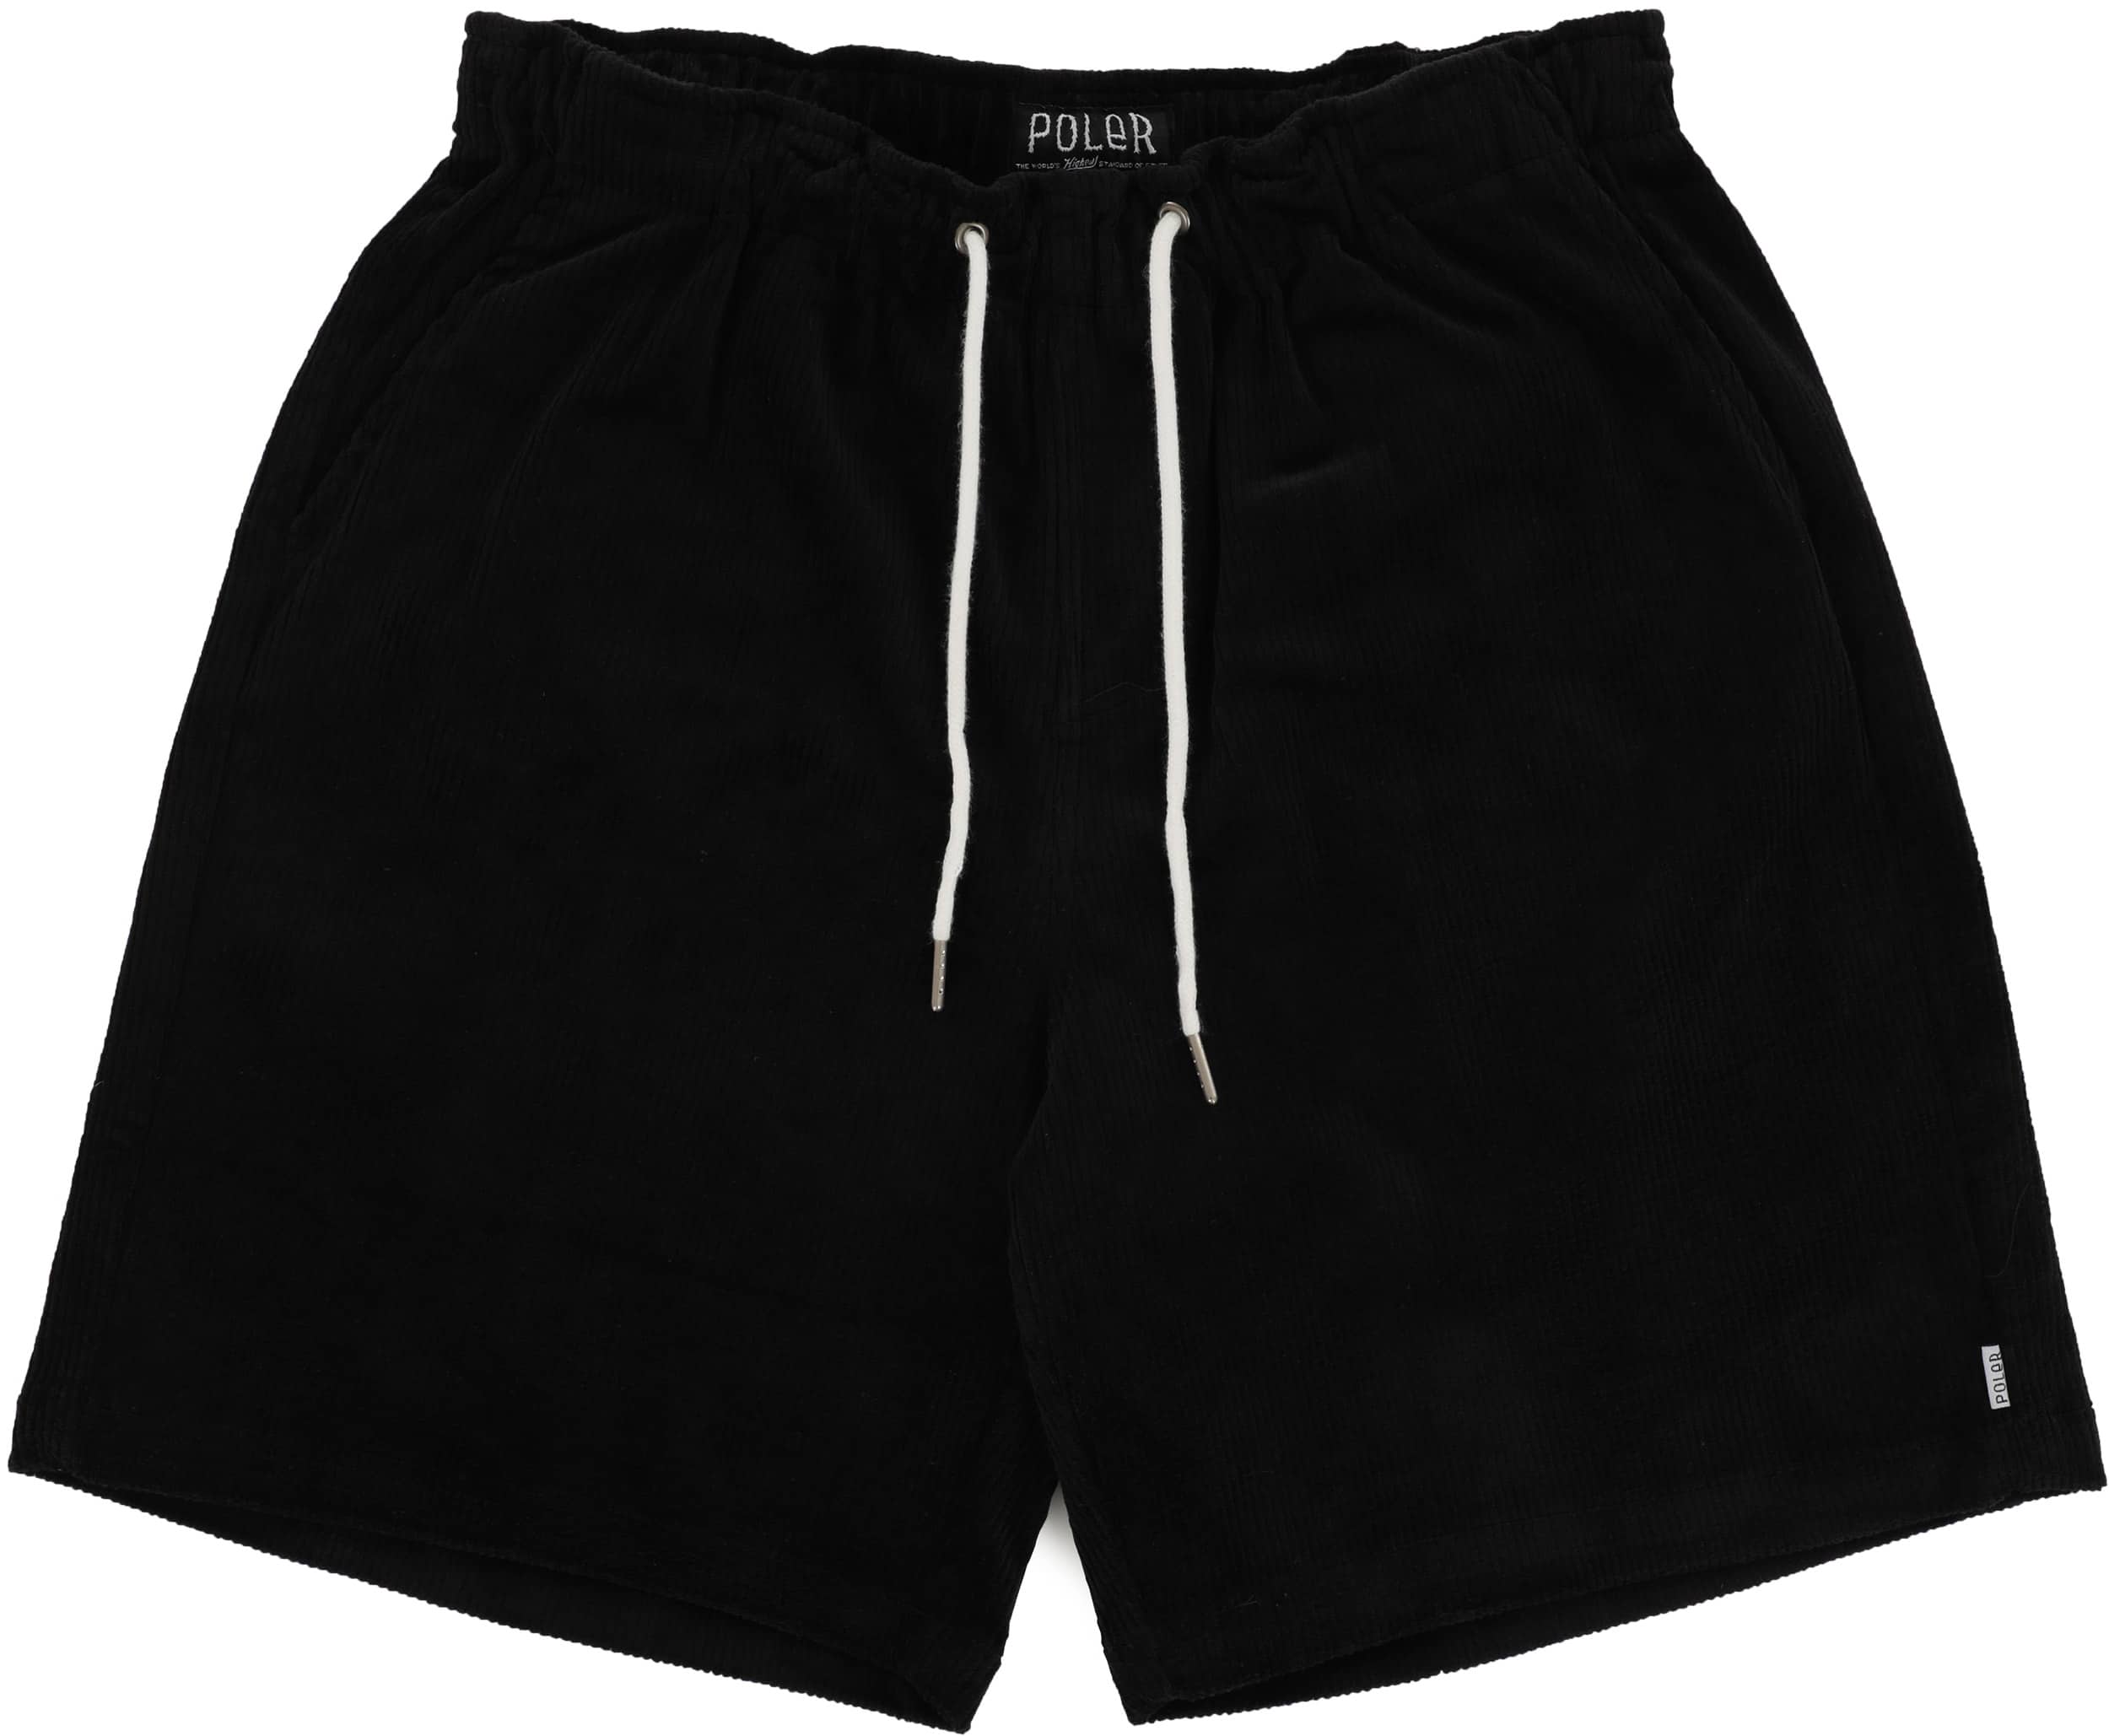 Poler Chort Shorts - black | Tactics